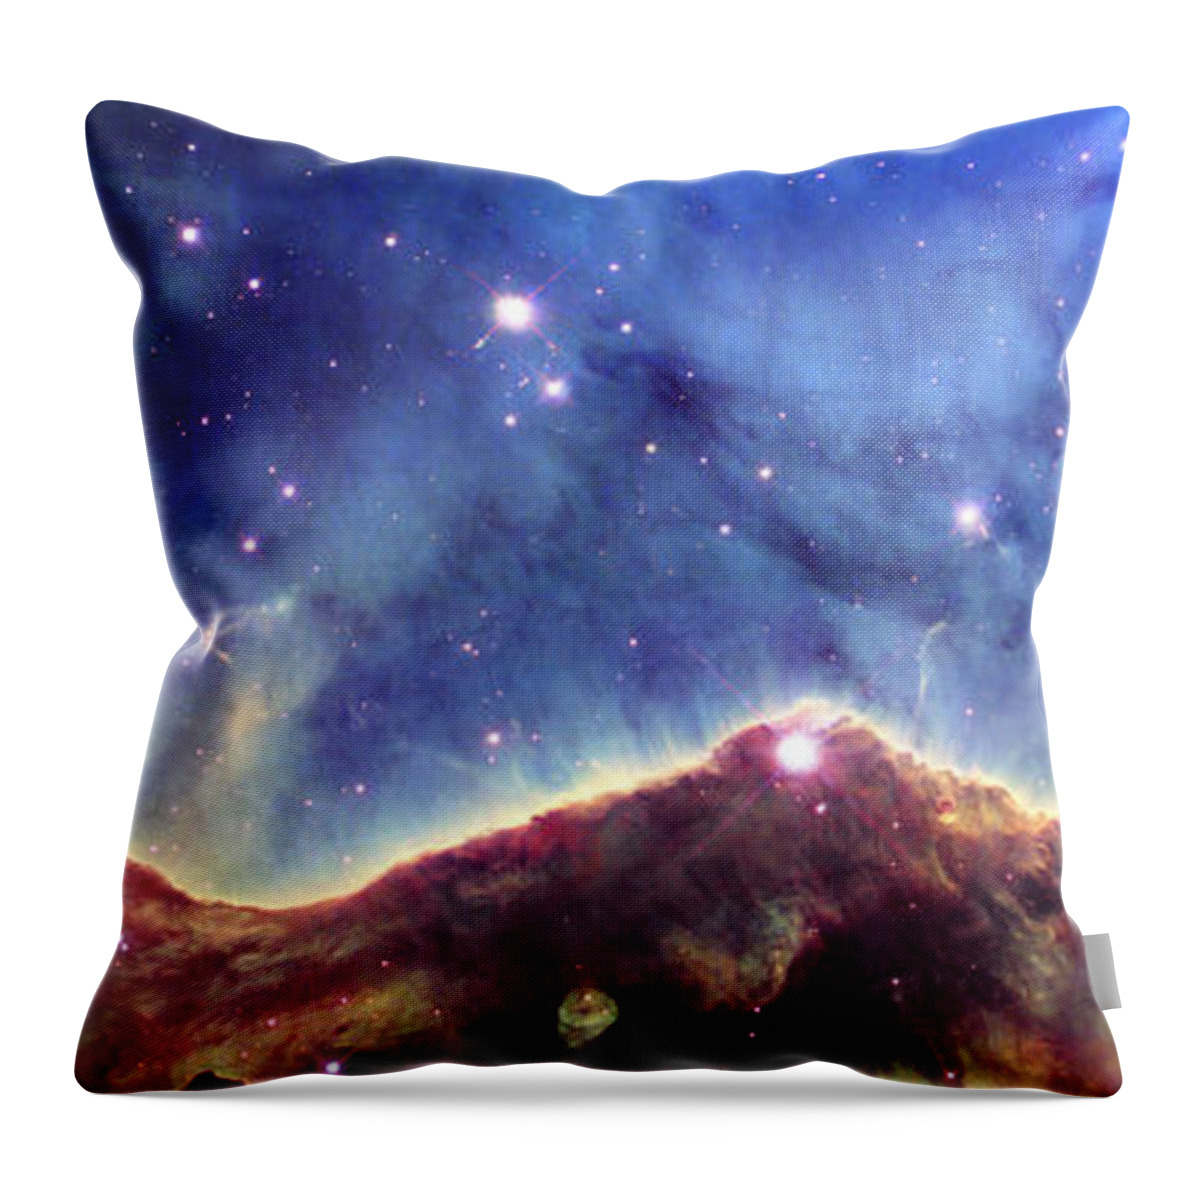 Star Throw Pillow featuring the photograph NGC 3324 Carina Nebula by Nicholas Burningham